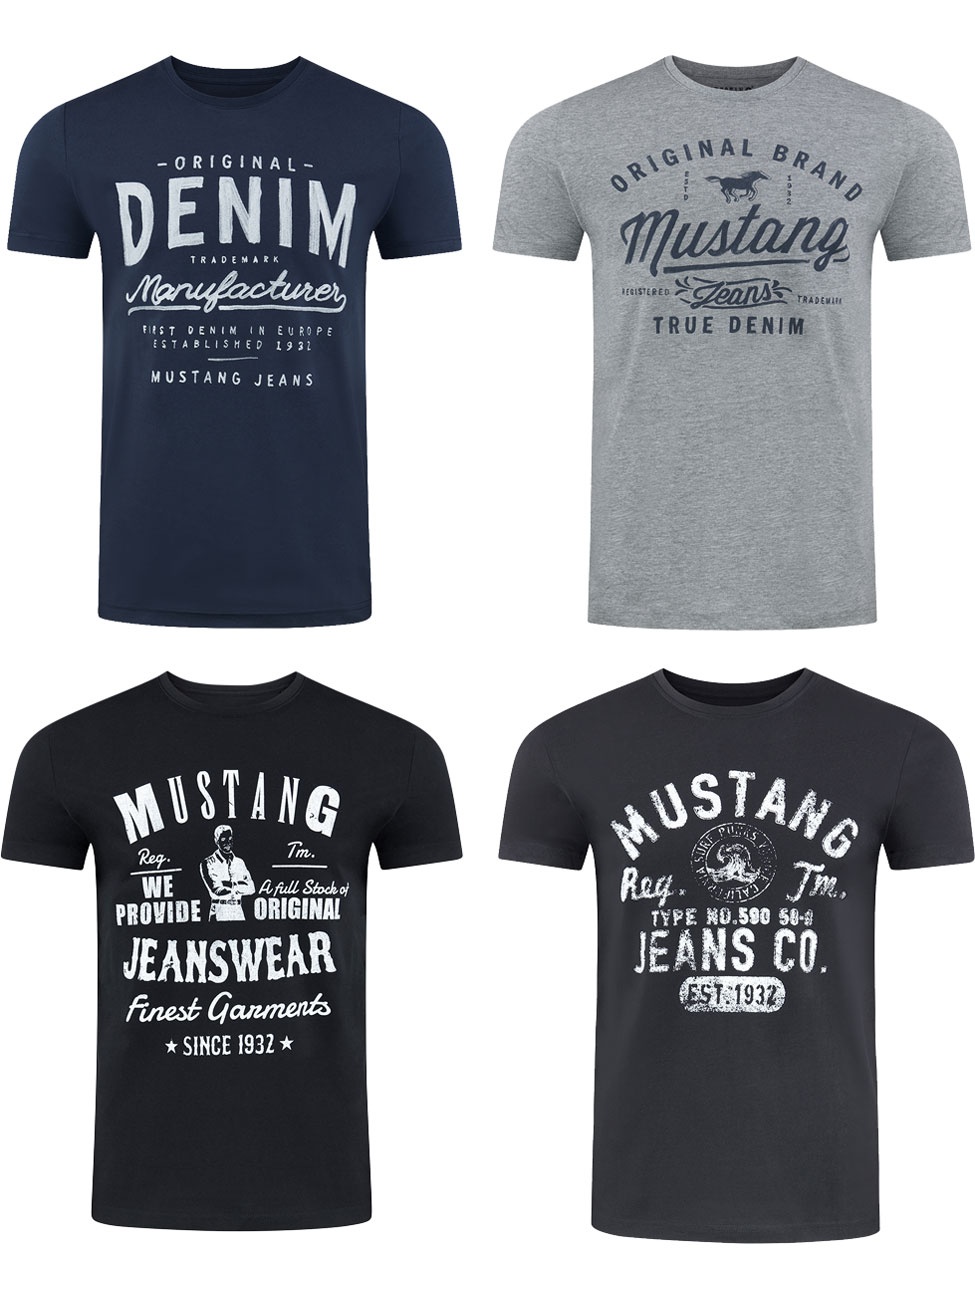 Mustang Herren T-Shirt Mustang Mehrfarbig Rundhals Regular Fit S bis 6XL 4er Pack Regular Fit Blau, Grau, Schwarz L